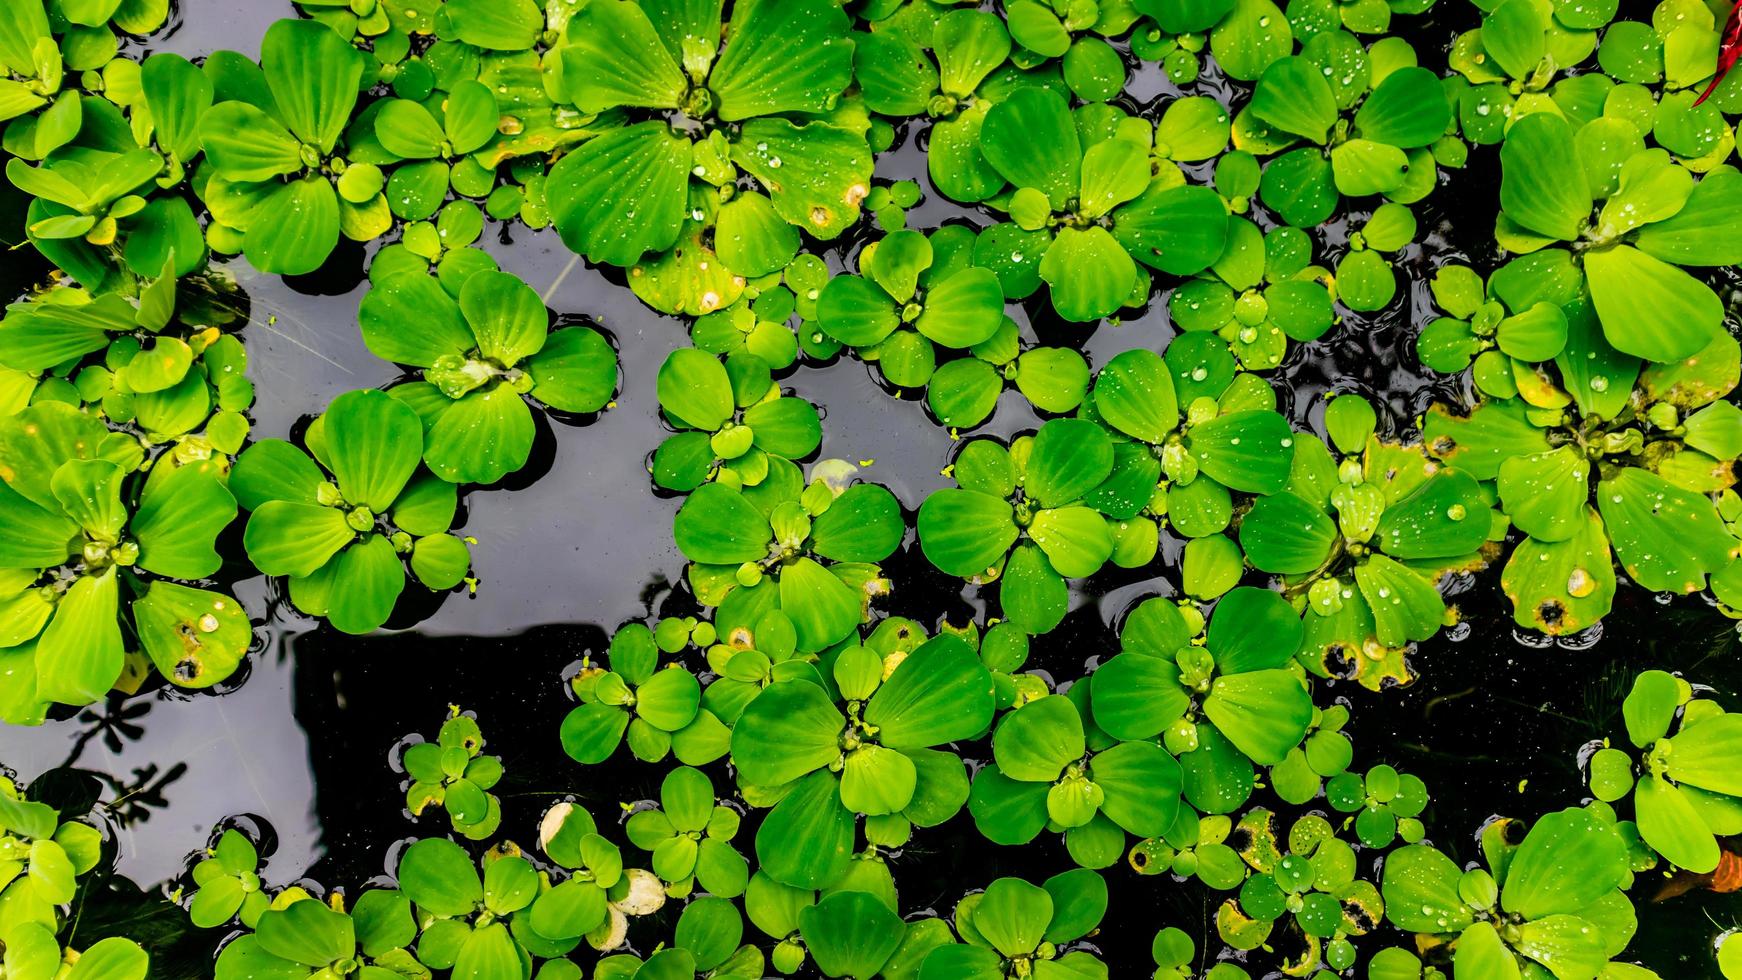 beautiful and amazing green water plant photo